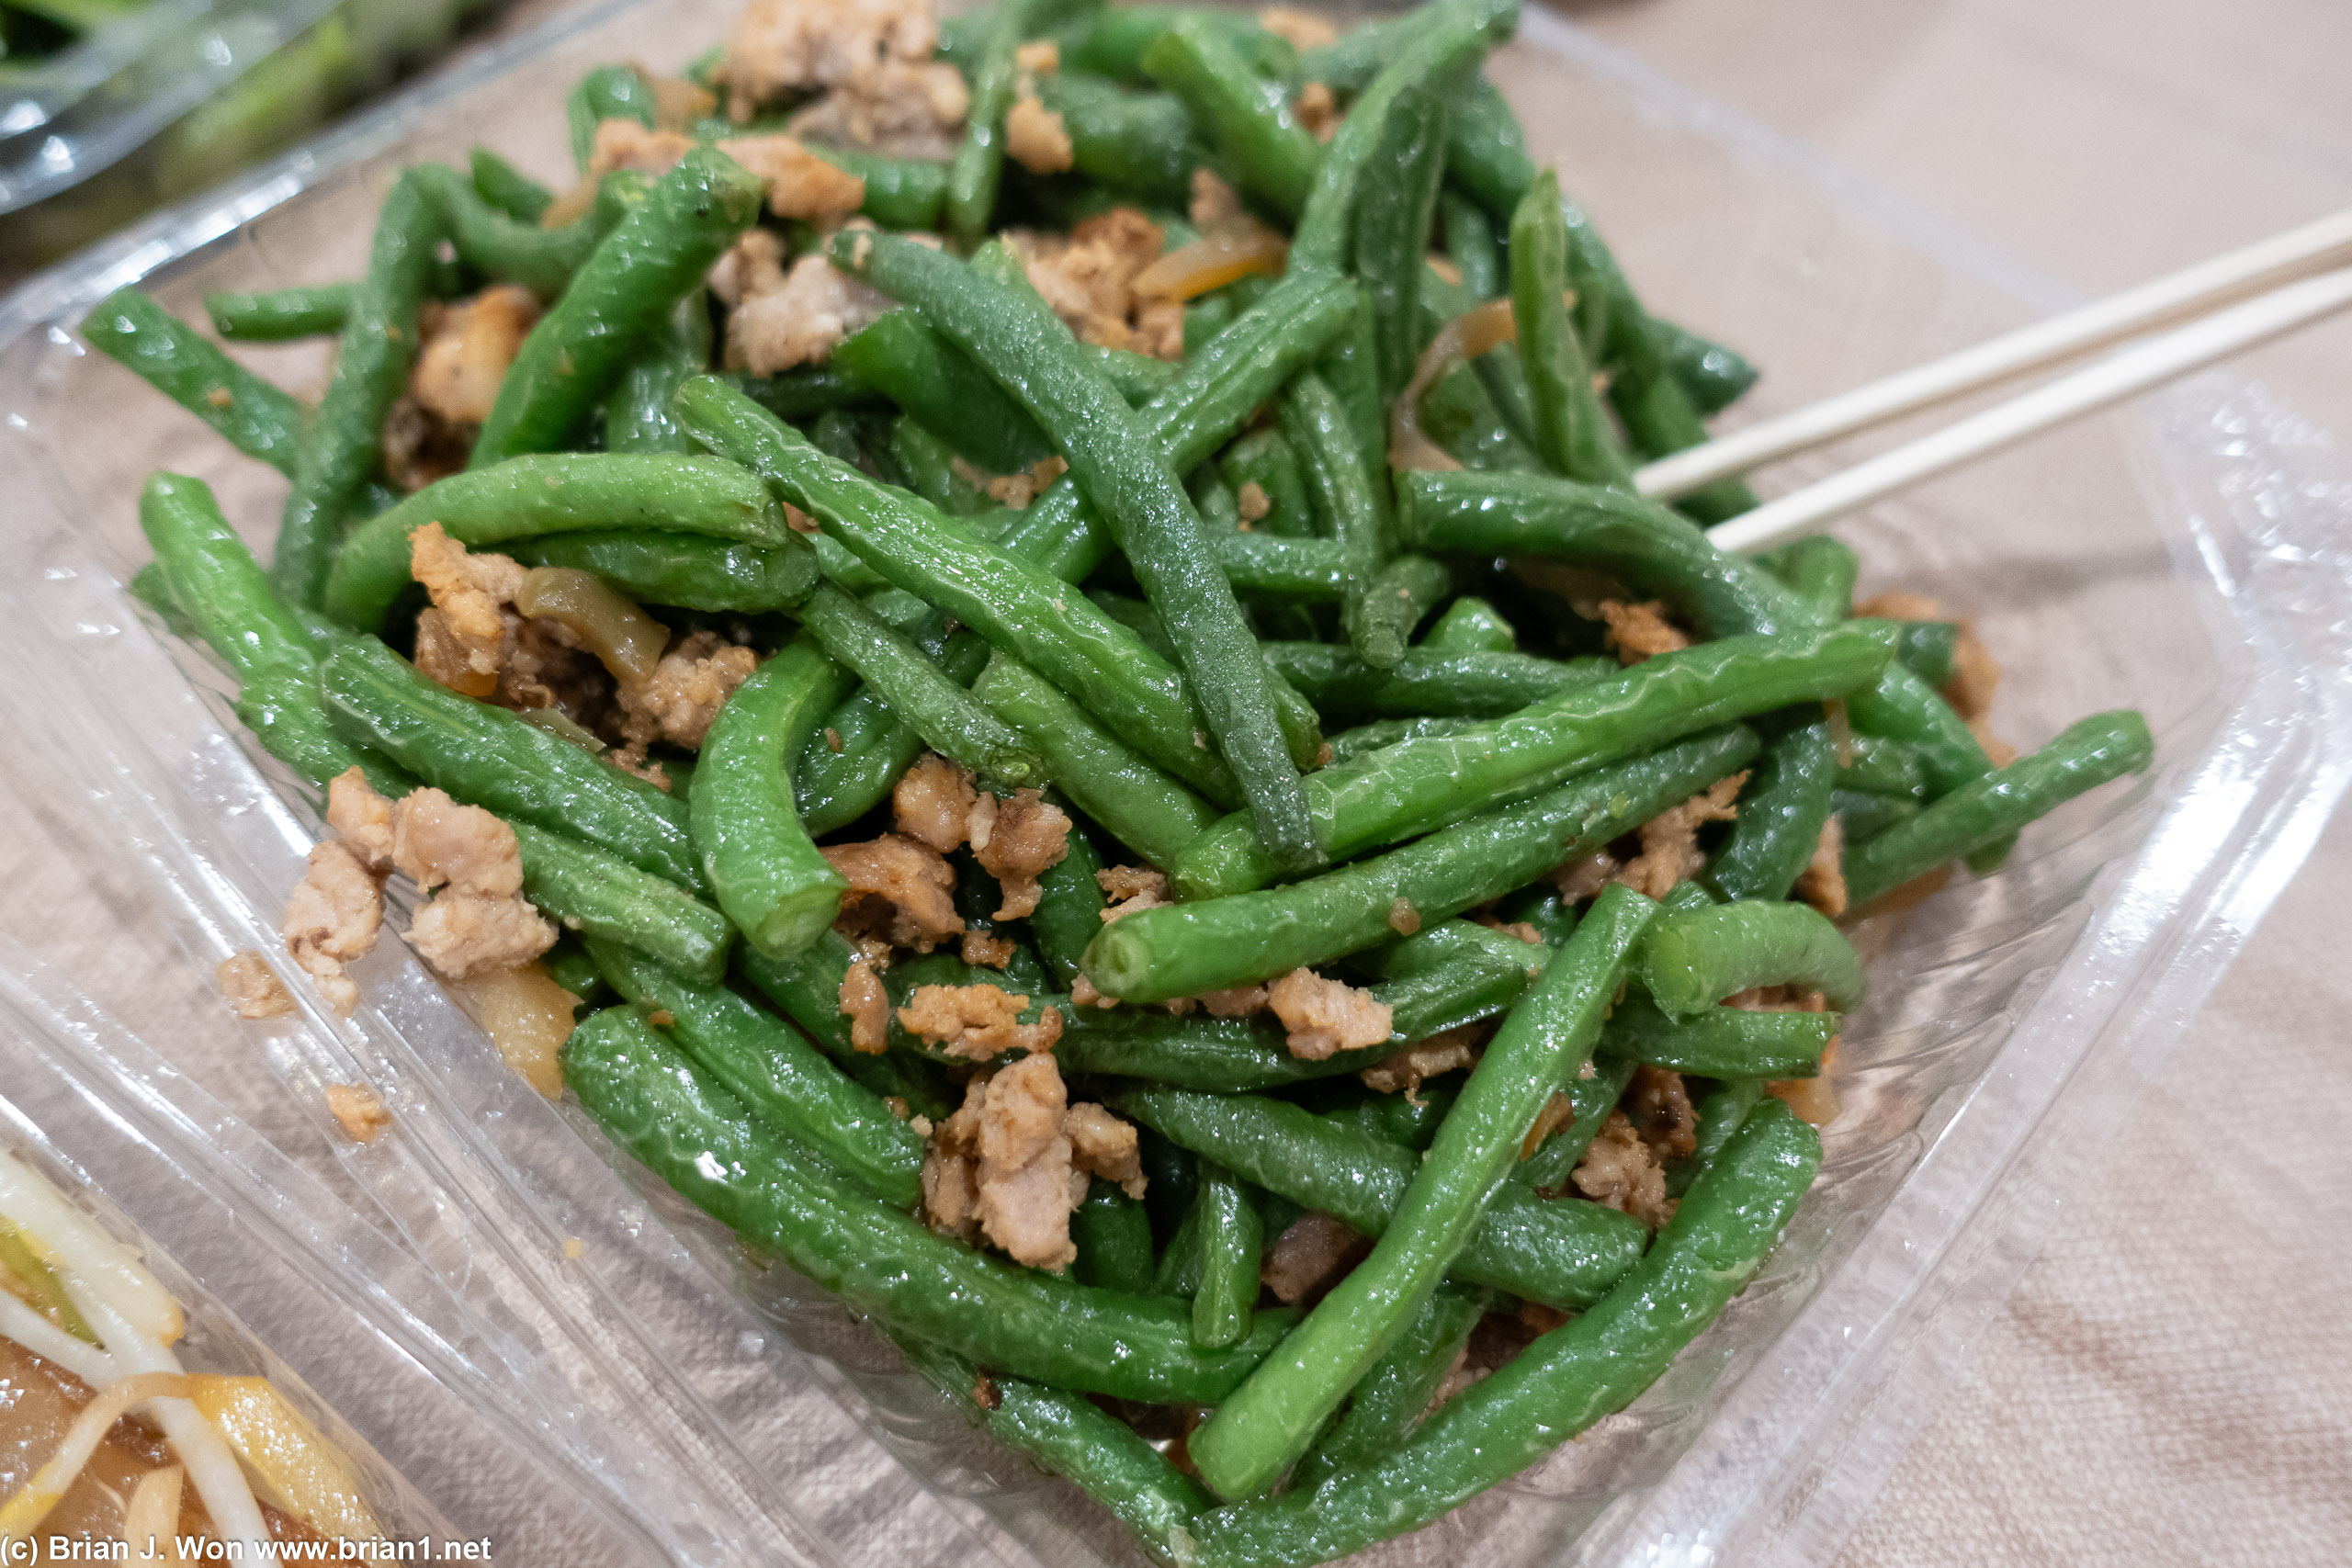 Green beans with pork, also nom.